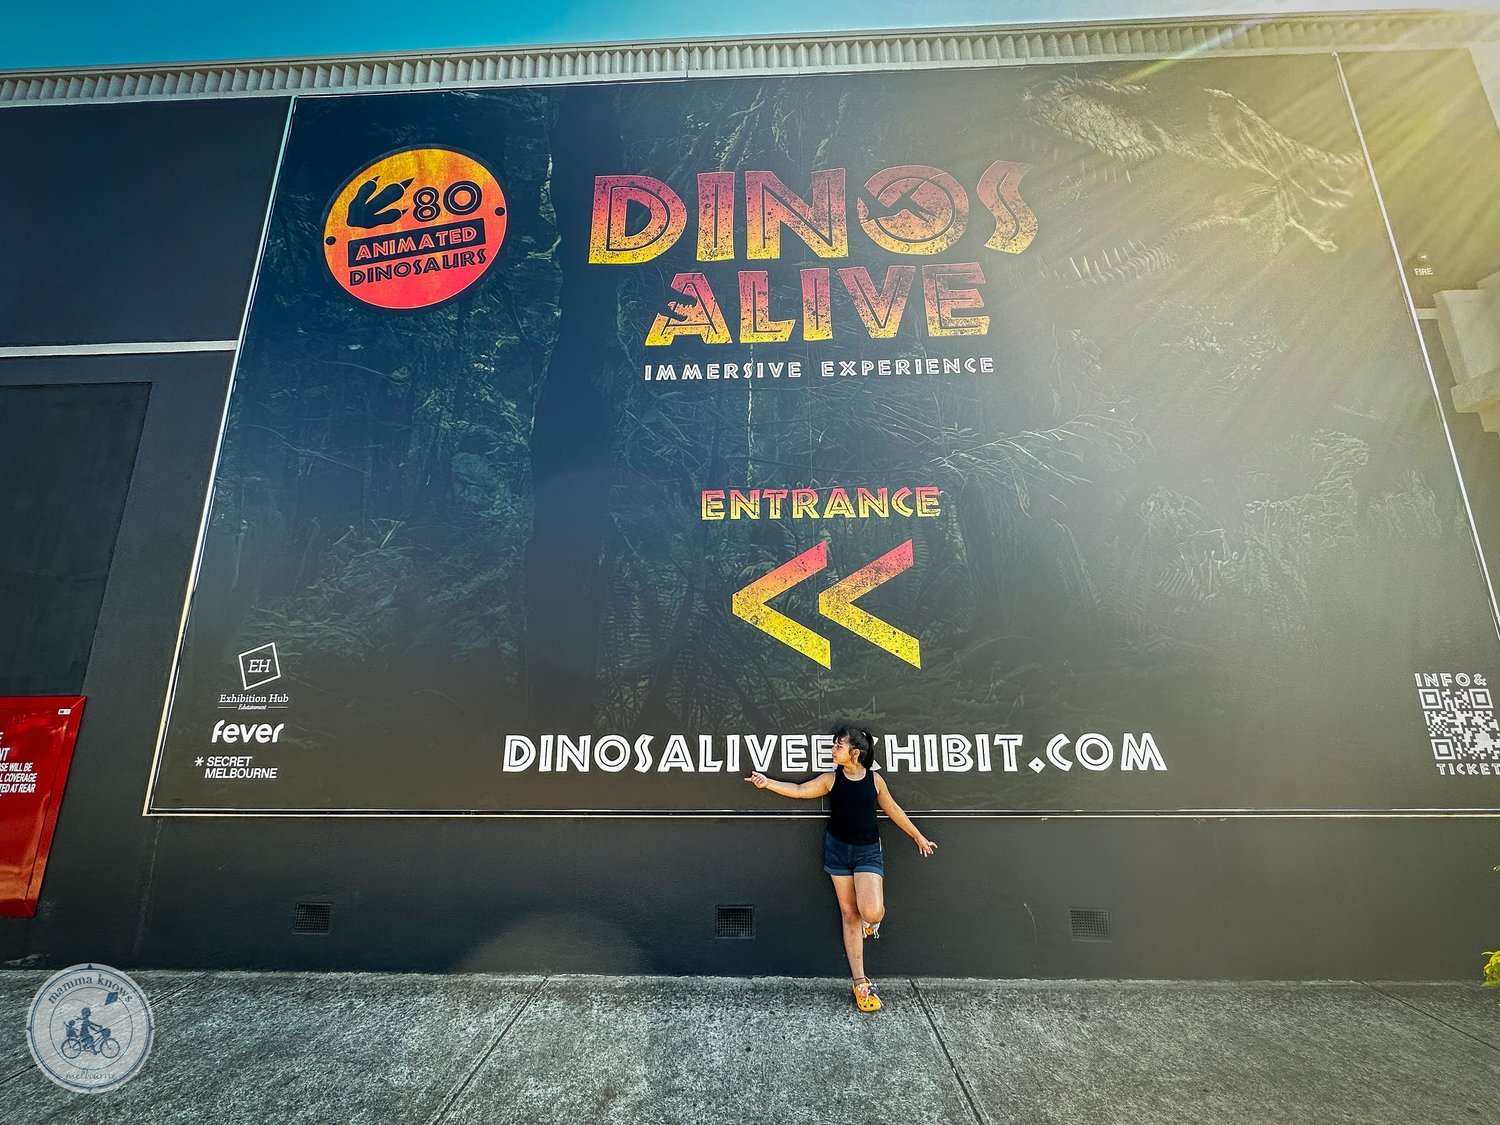 Dinos Alive